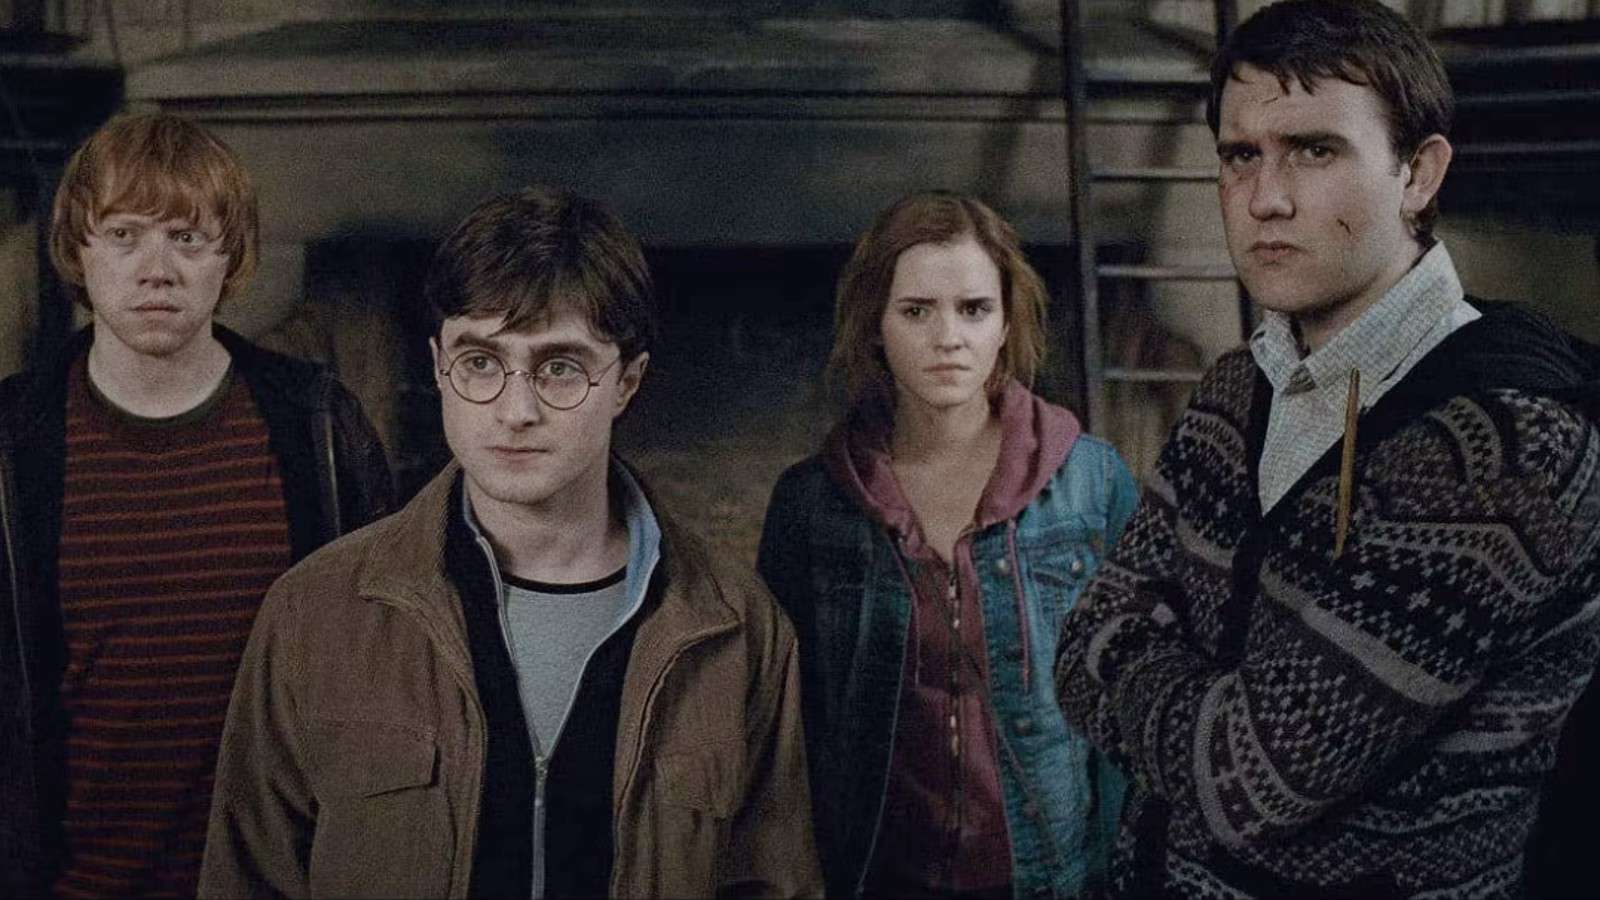 Rupert Grint, Daniel Radcliffe, Emma Watson, and Matthew Lewis in Deathly Hallows Part 2